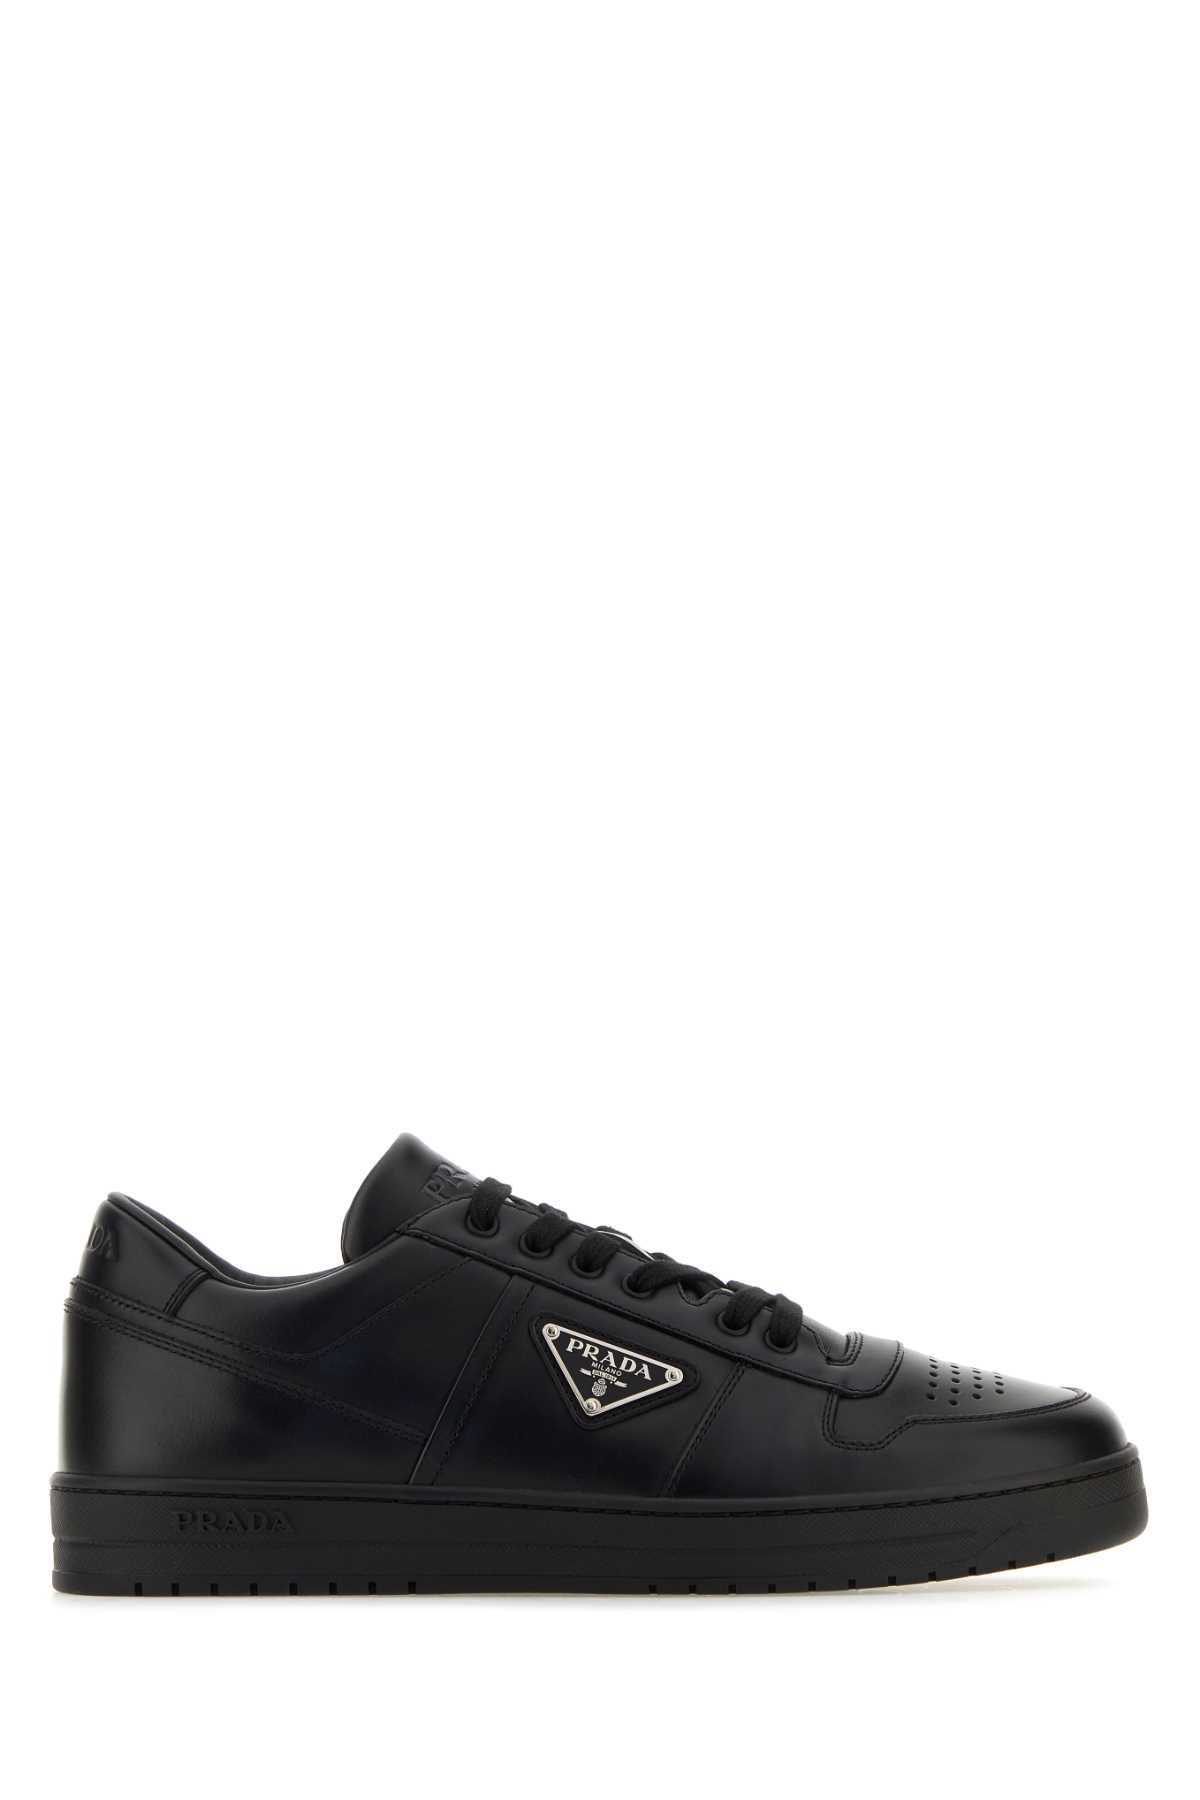 Shop Prada Black Leather Sneakers In F0002